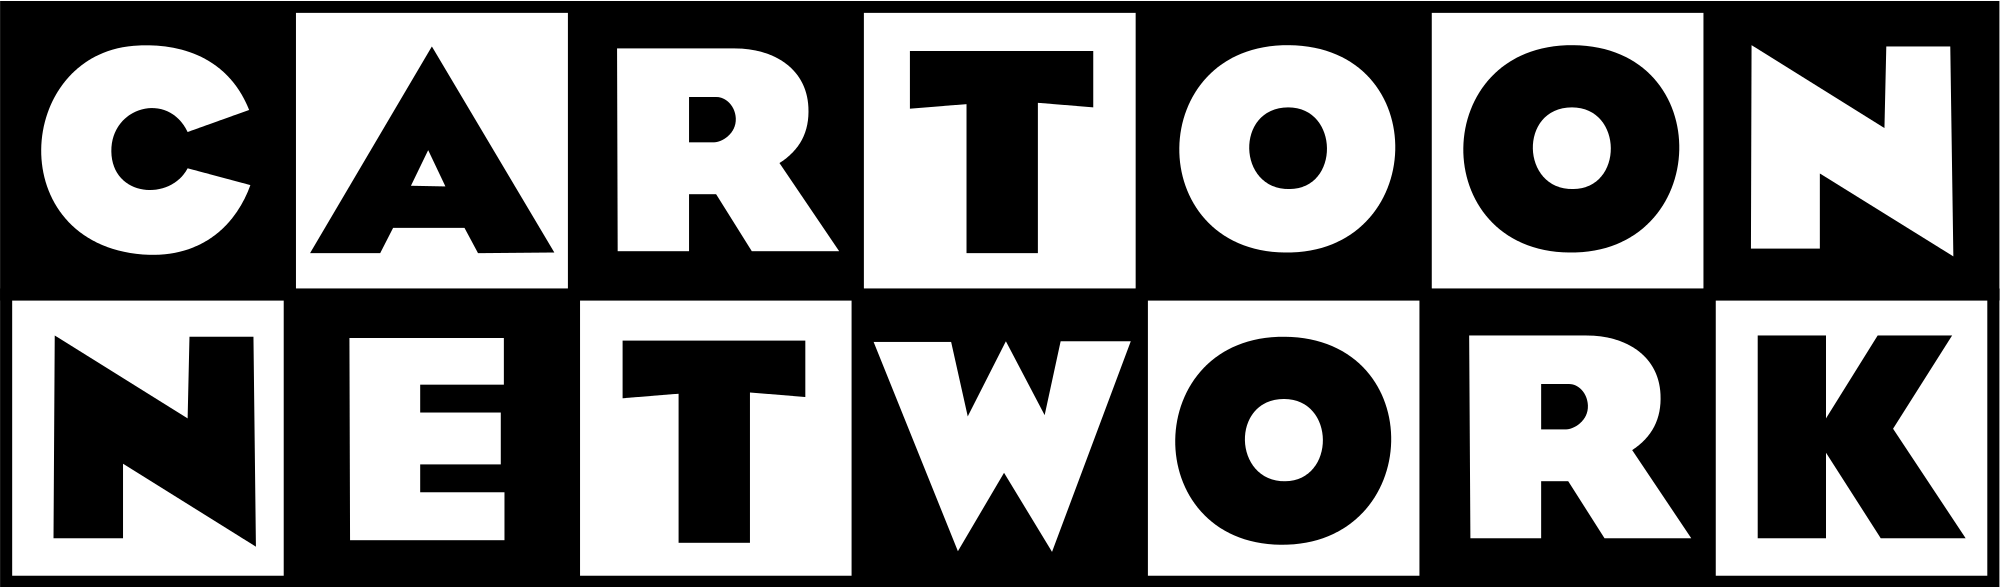 Cartoonnetwork.com Logo - File:Cartoon Network 1992 logo.svg - Wikimedia Commons